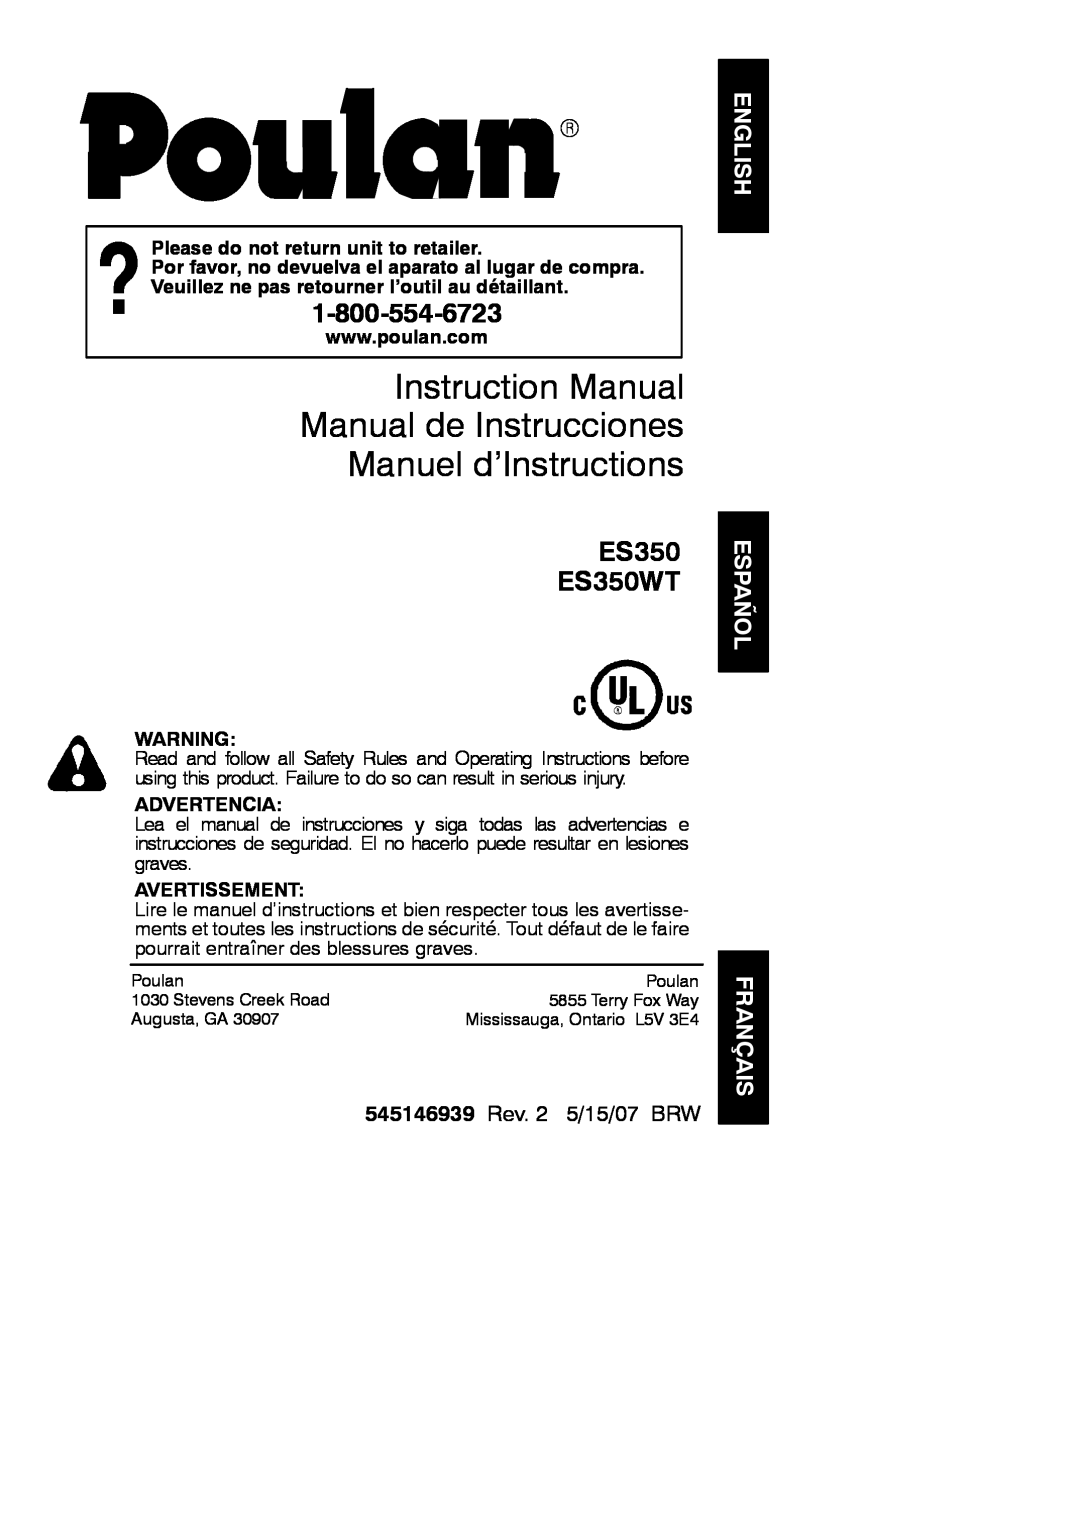 Poulan 952044370 instruction manual Español, Français, Instruction Manual Manual de Instrucciones Manuel d’Instructions 